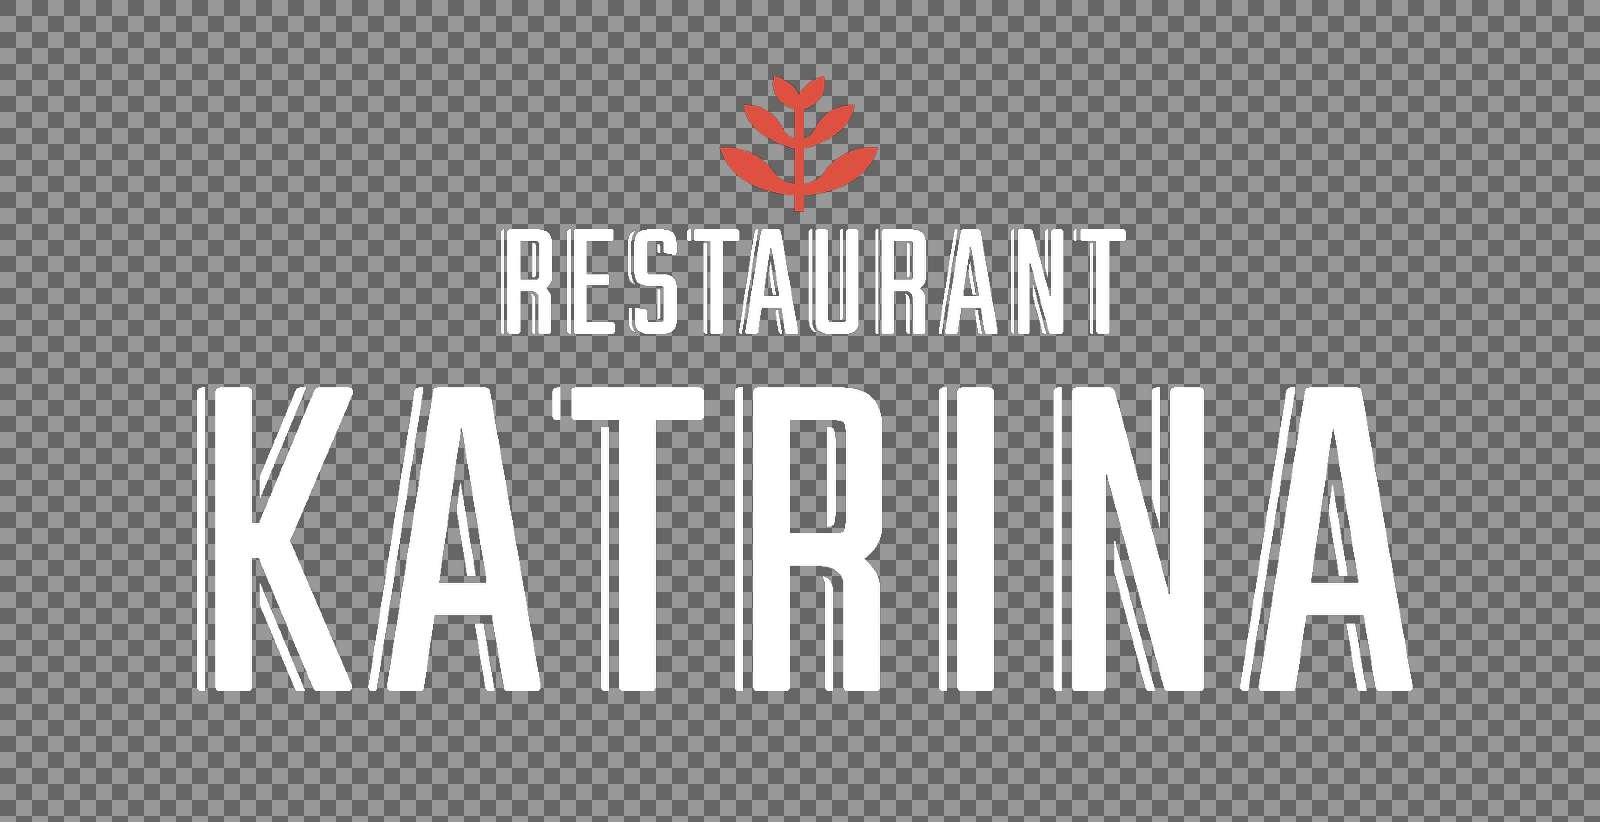 Resturant Katrina 07 02